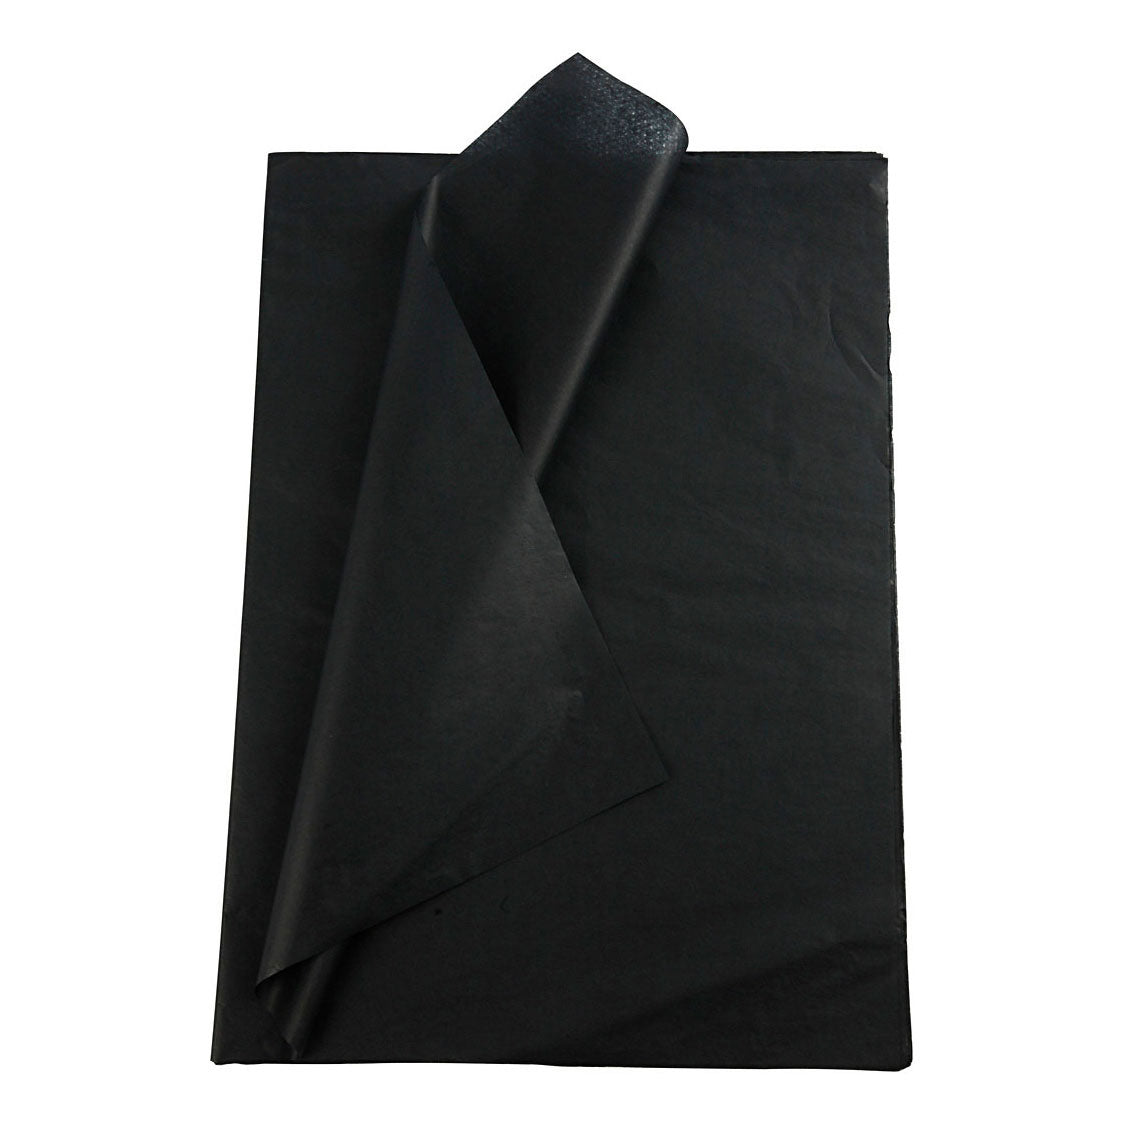 Creativ Company Papel de seda negro 10 hojas 14 gr, 50x70cm